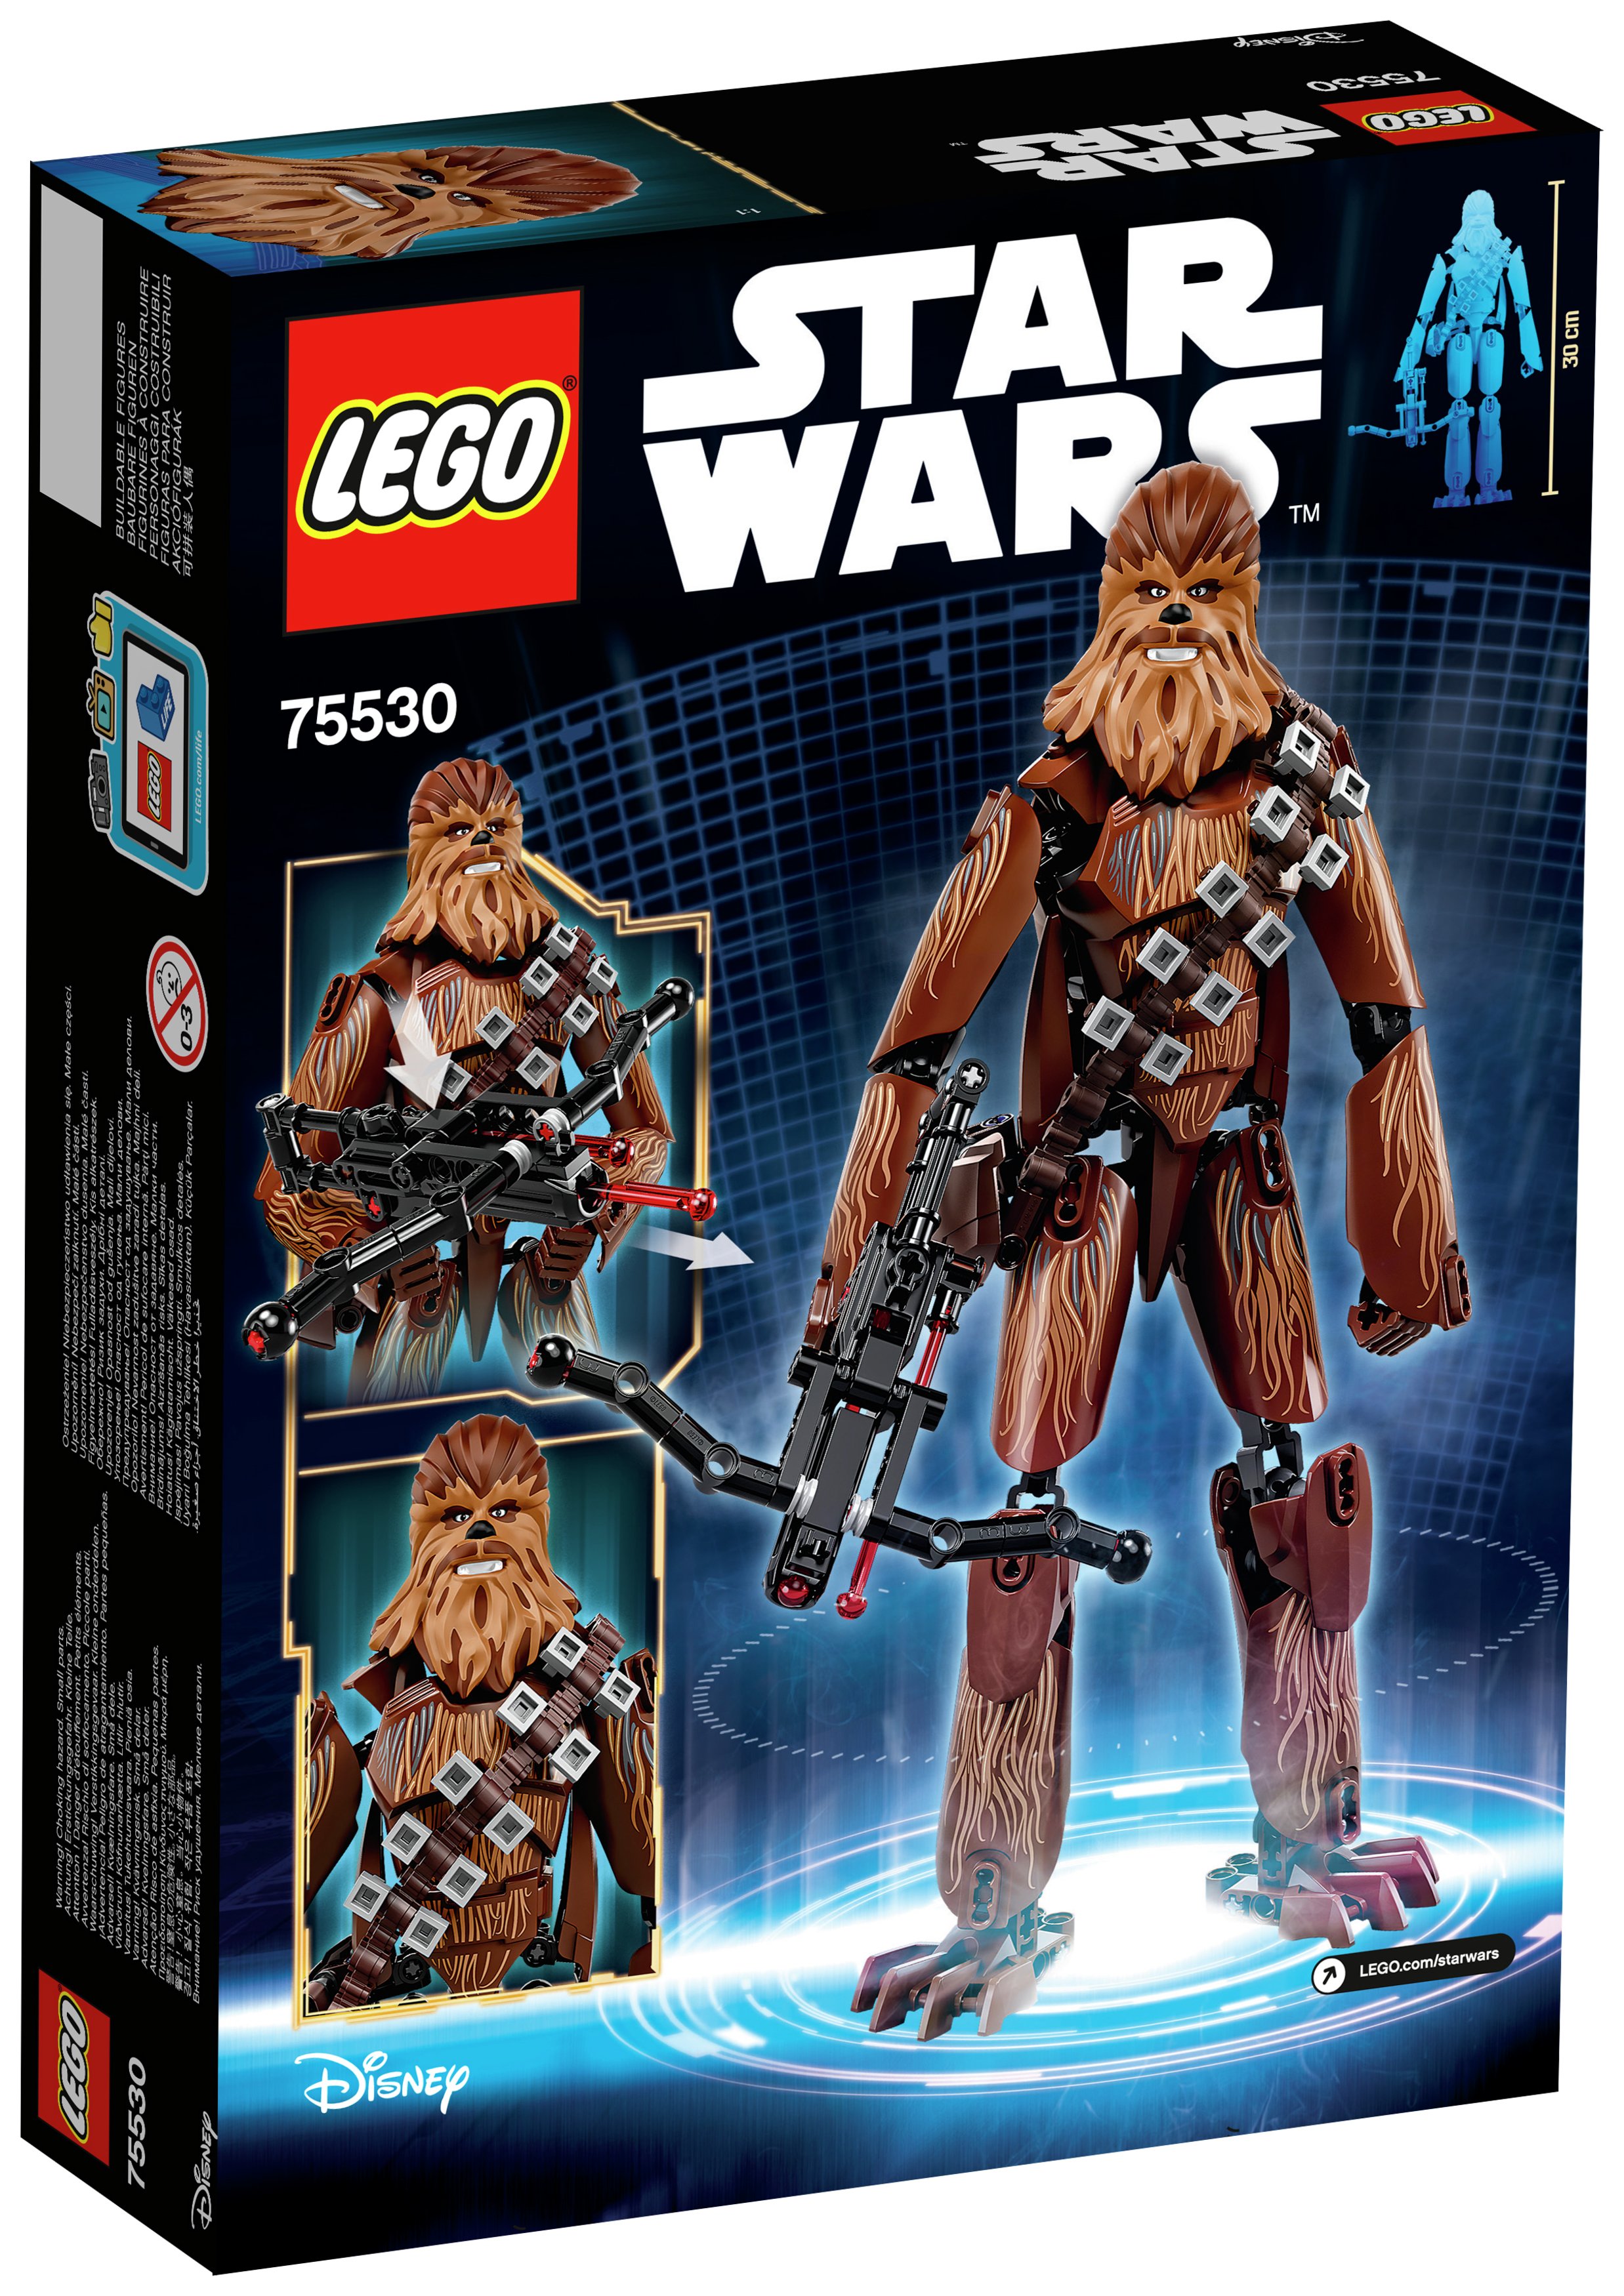 LEGO Star Wars Chewbacca Reviews